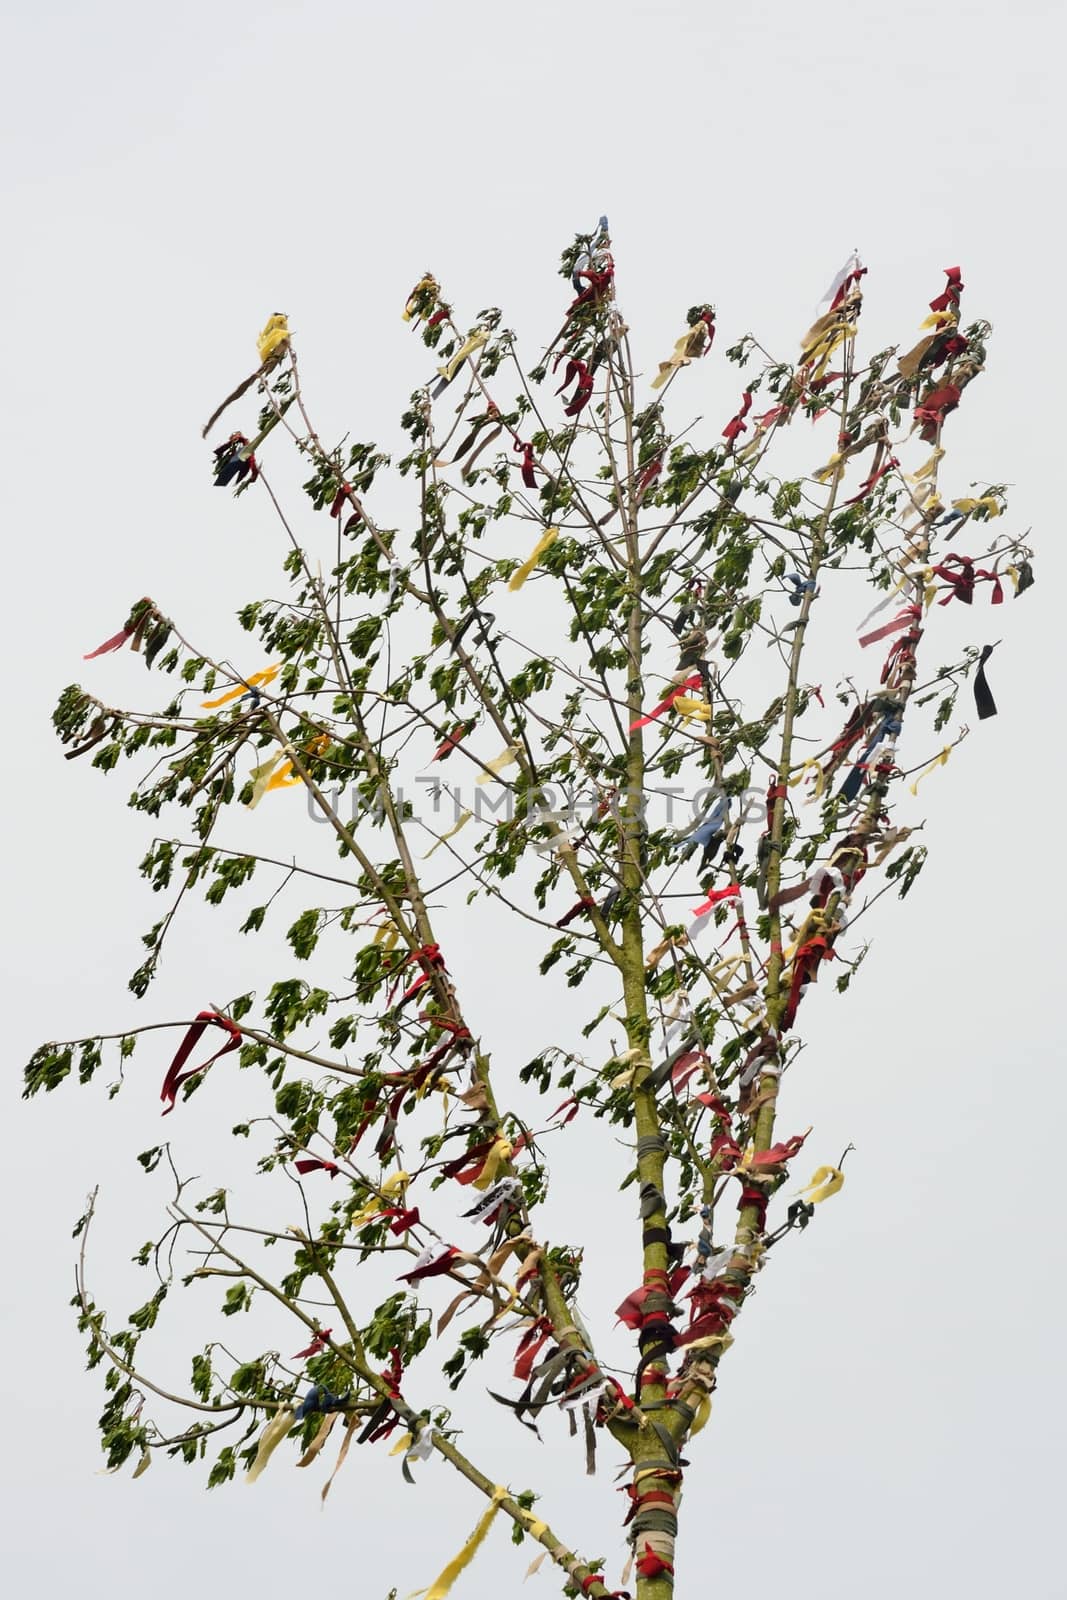 maypole tree and ribbons by pauws99